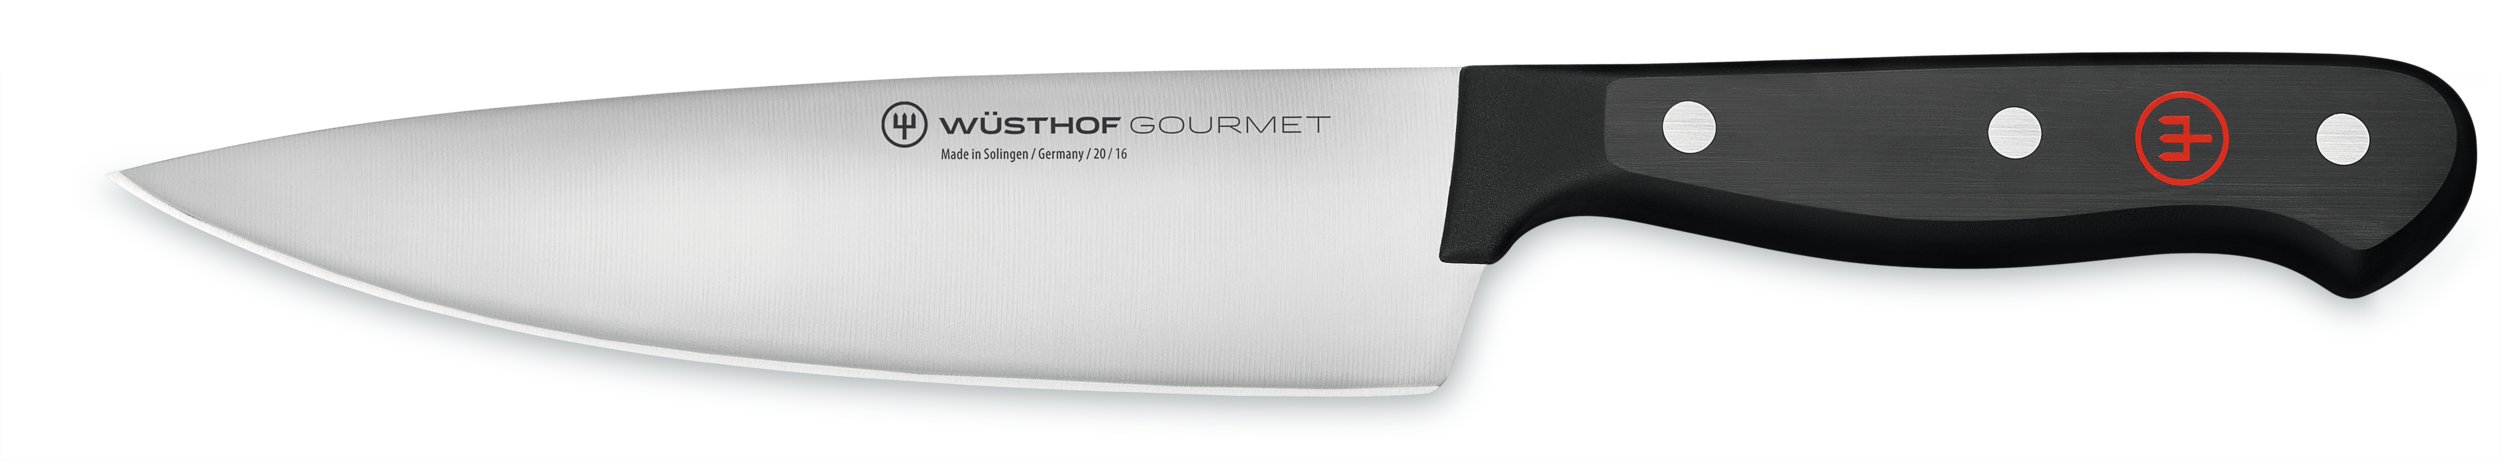 Wusthof Gourmet Chef's Knife 16cm